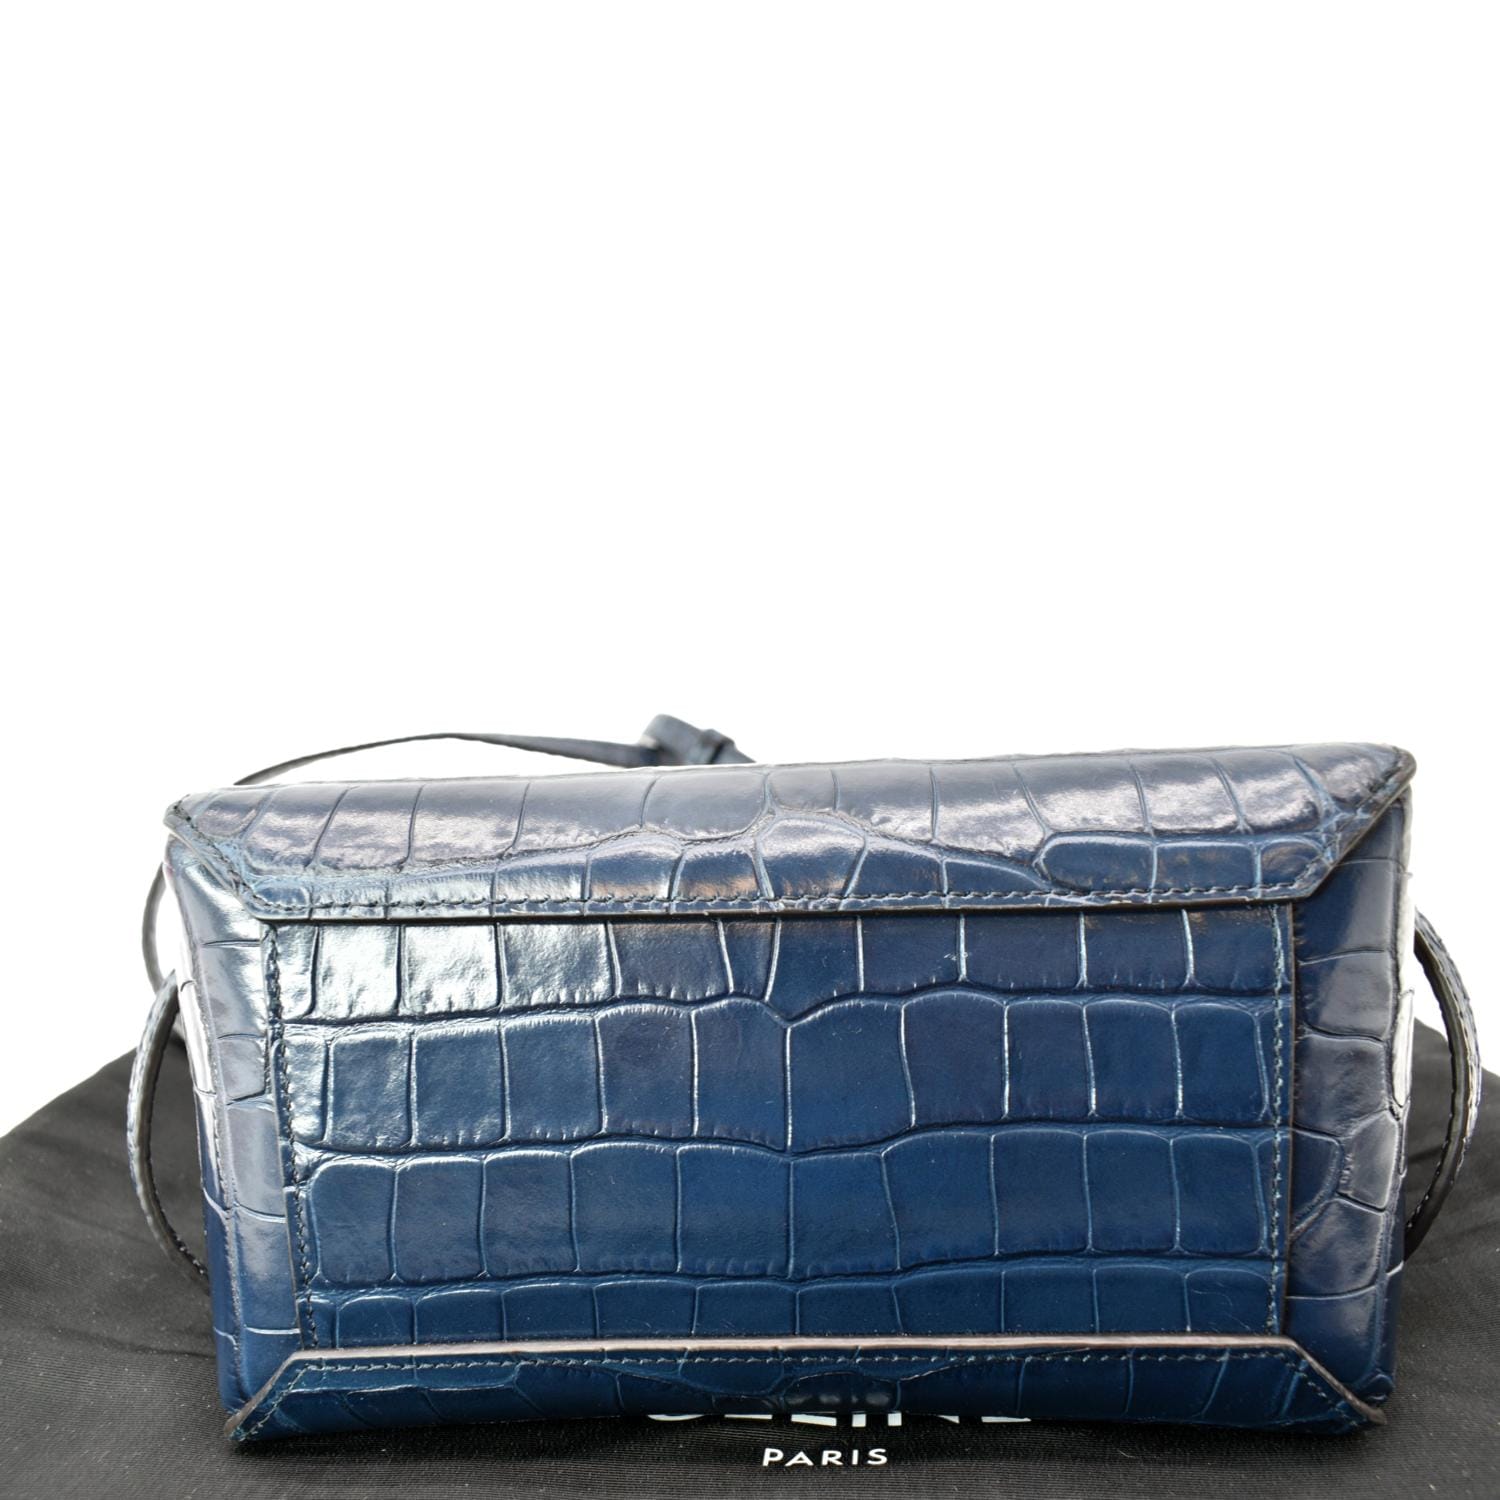 CELINE Nano Belt Bag UNBOXING - How I got this RARE Navy Blue